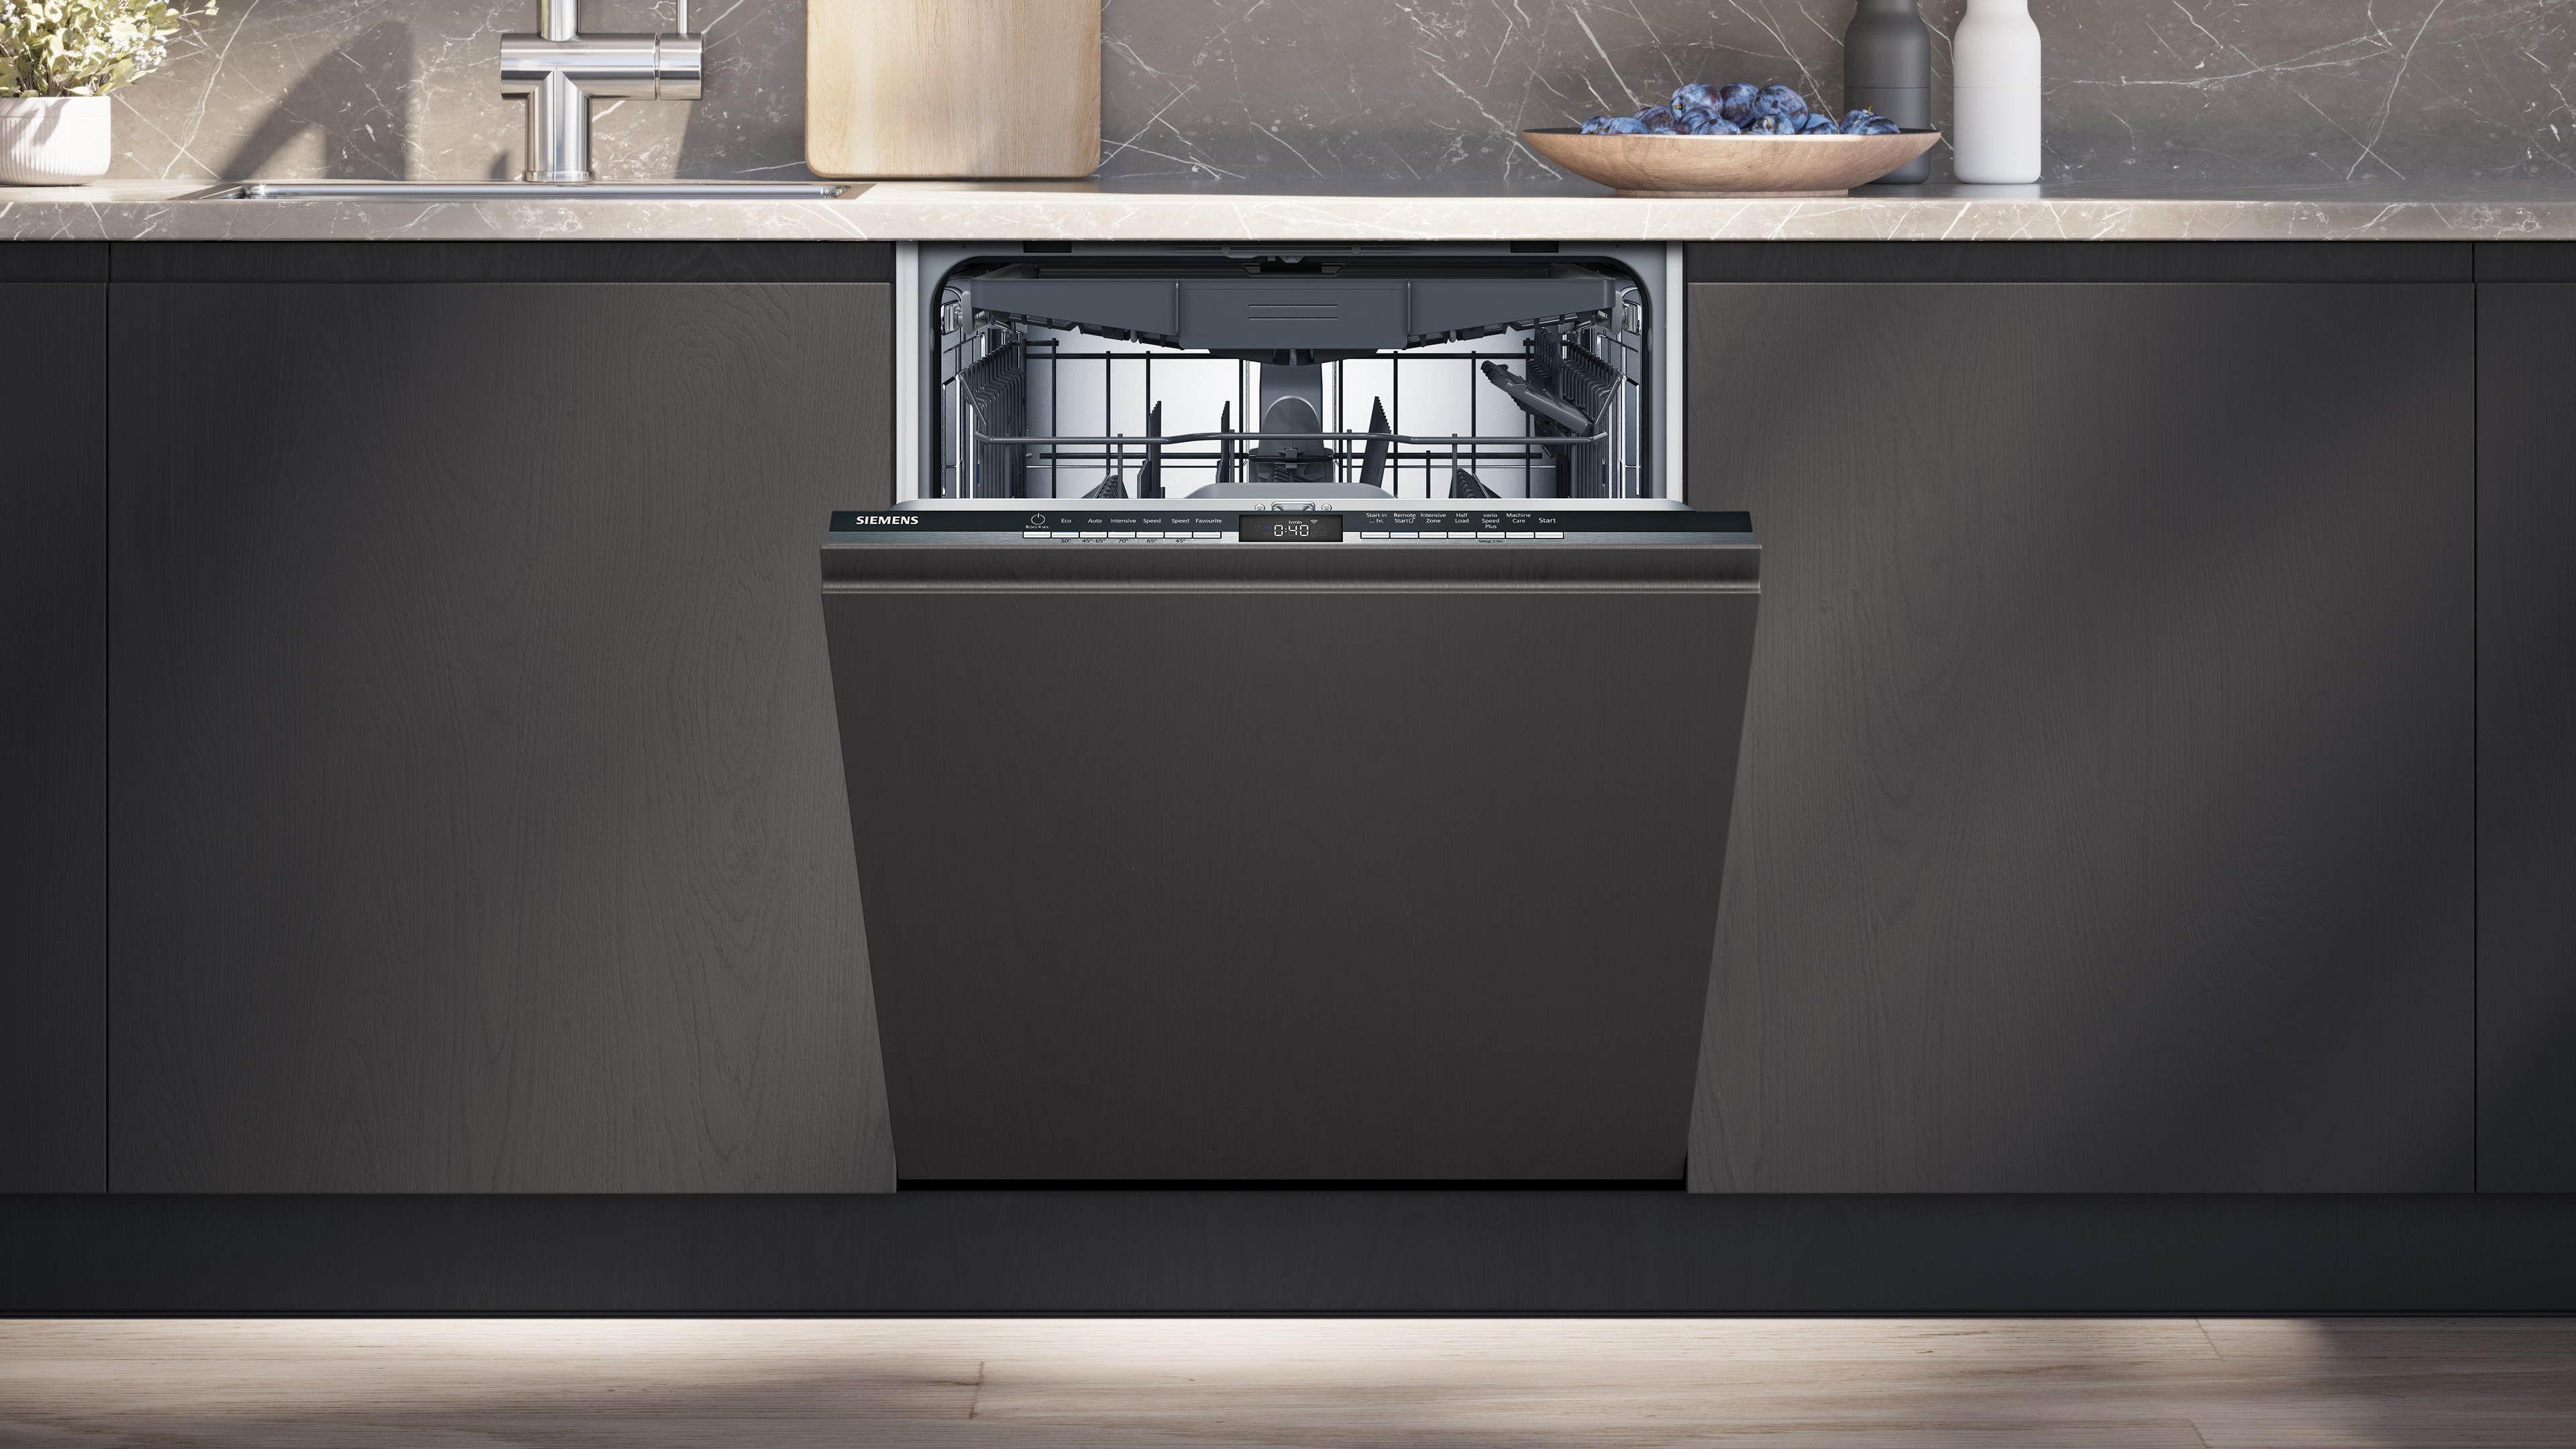 Siemens iQ300 Fully-Integrated Dishwasher 60cm SX73HX10VG - Posh Import